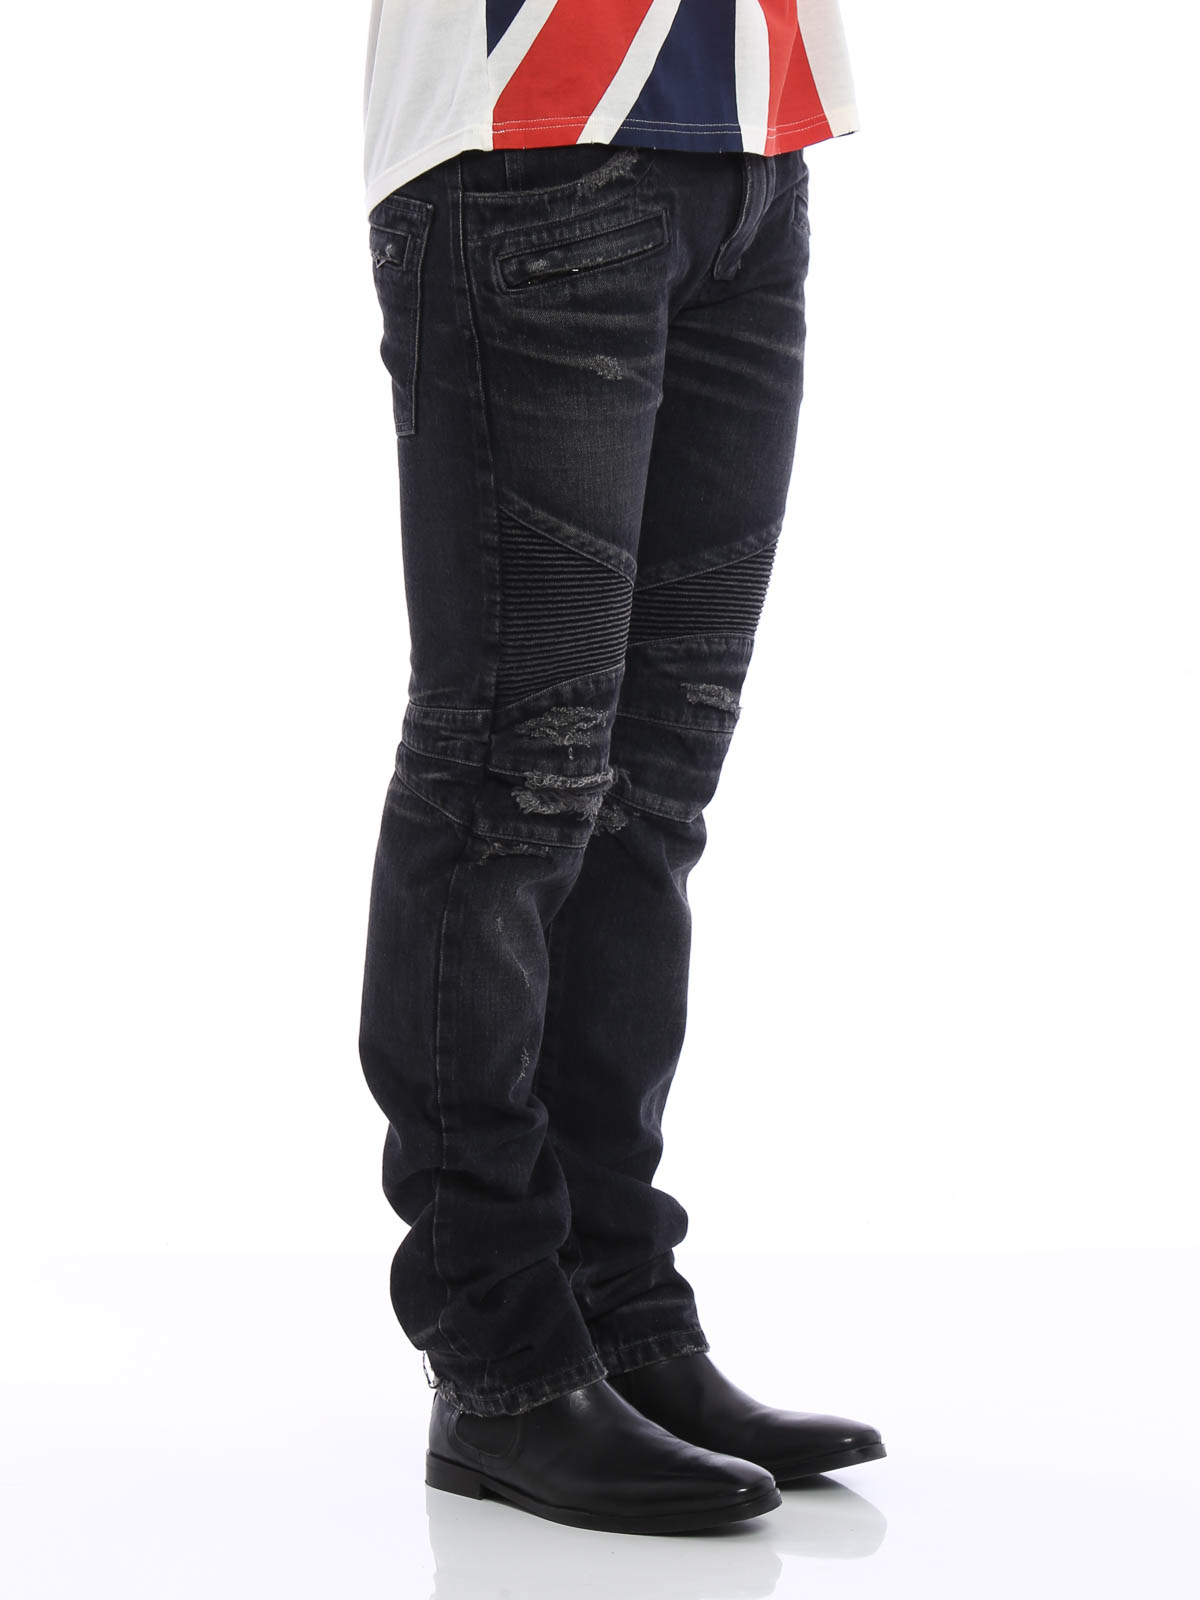 protest kom videre katastrofe Straight leg jeans Balmain - Vintage biker jeans - S6HT500B526V172